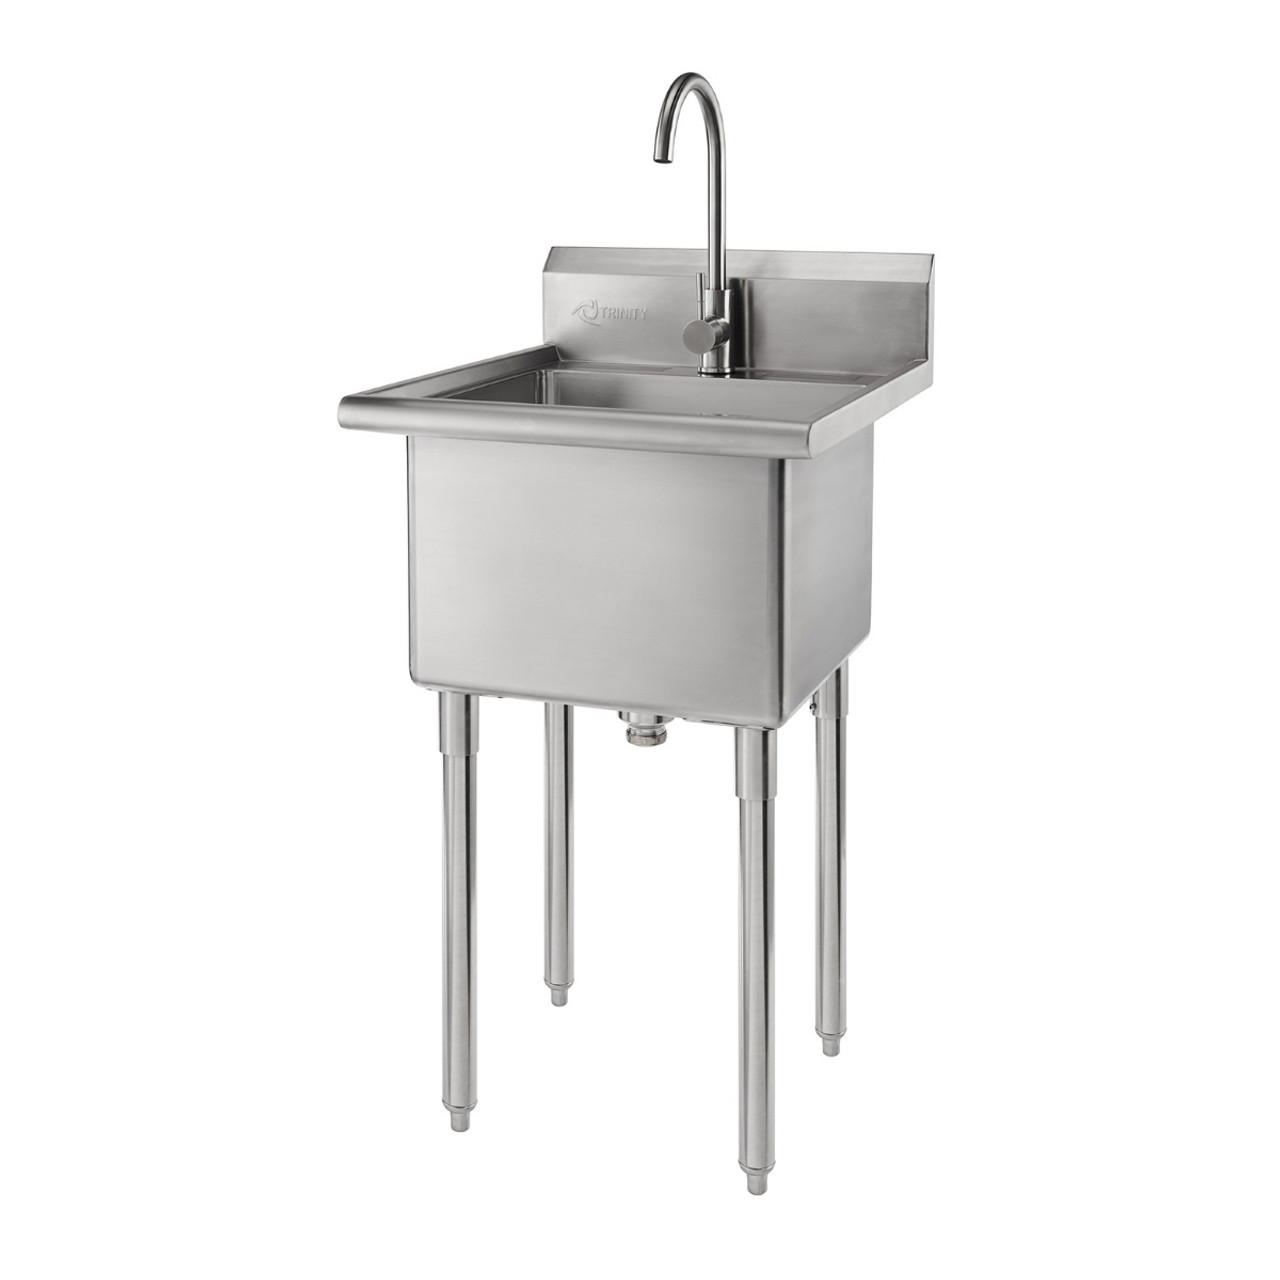 Multifunctional washbasin kitchen accessories dishwashing sink